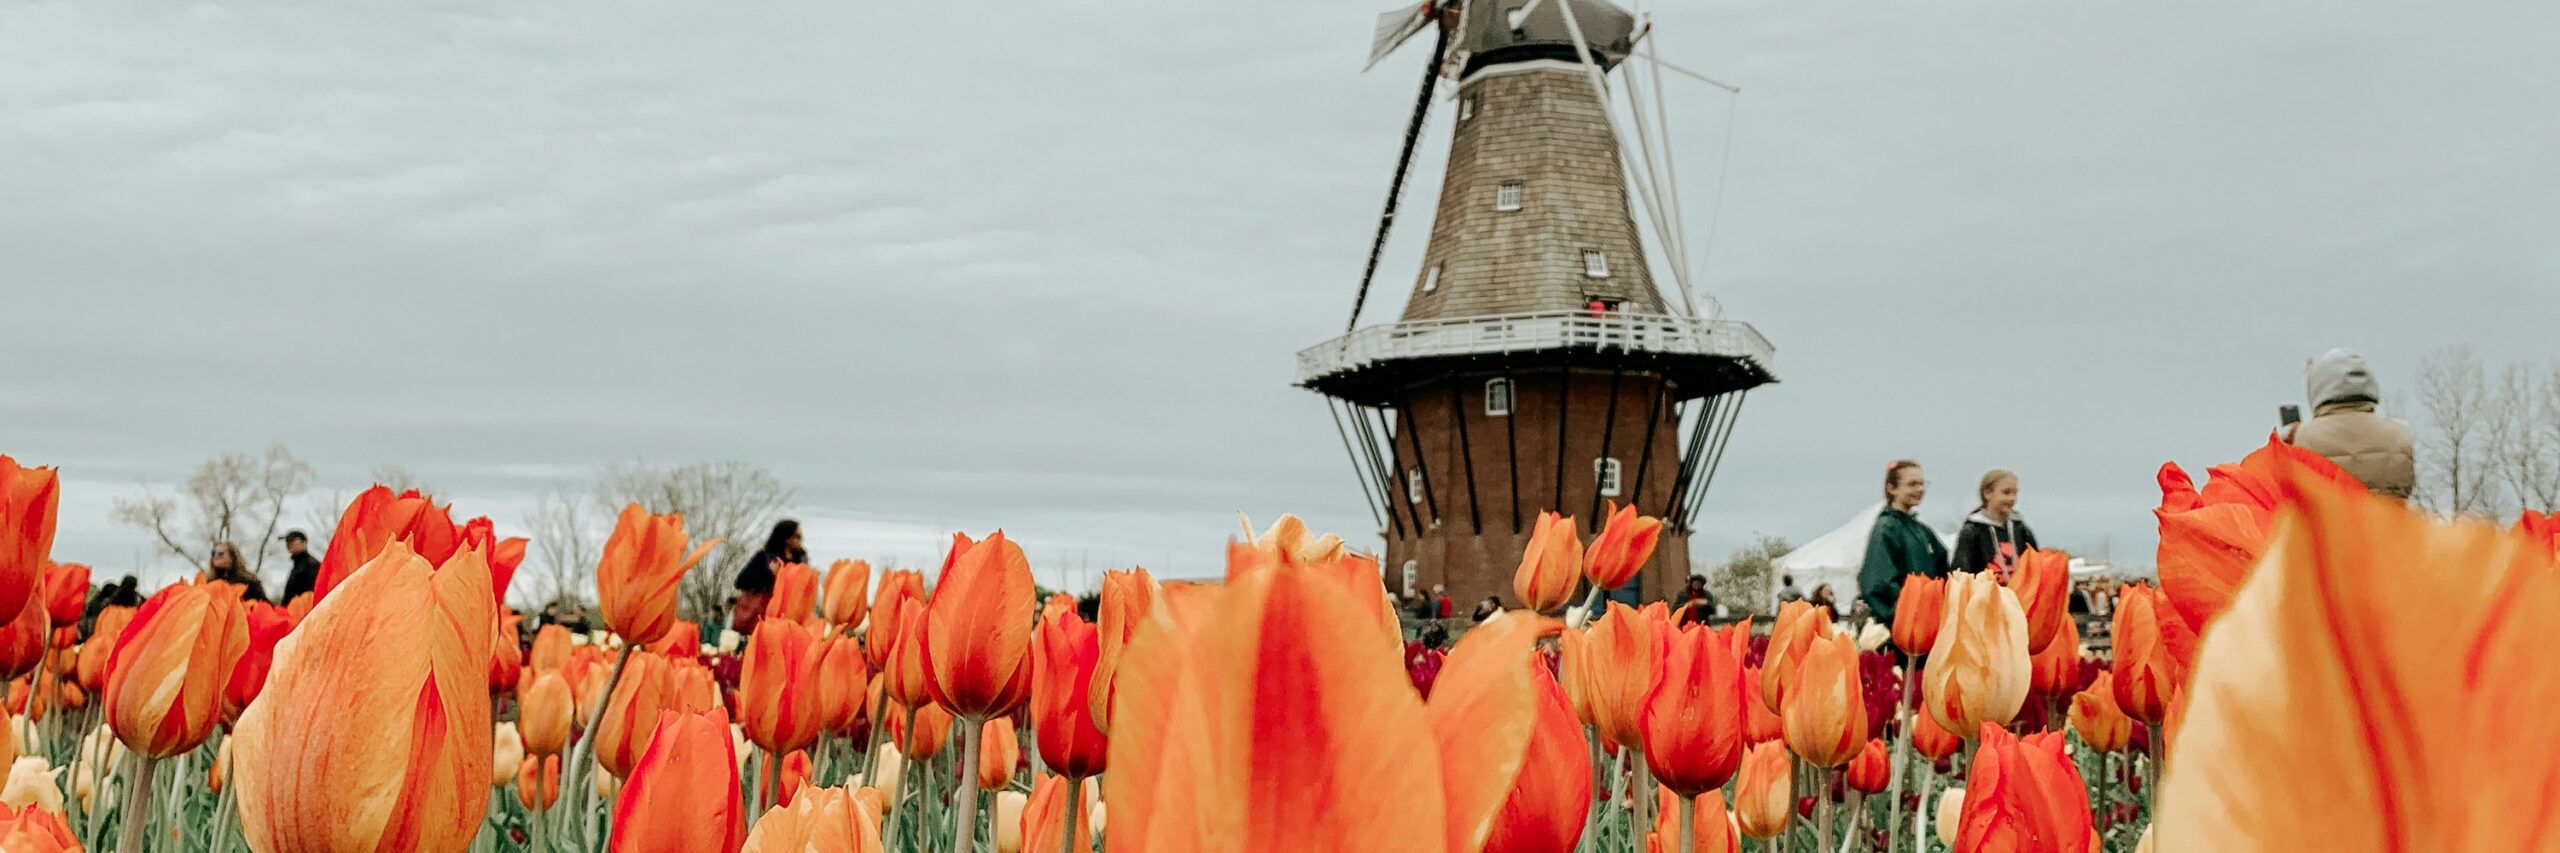 tulip time festival